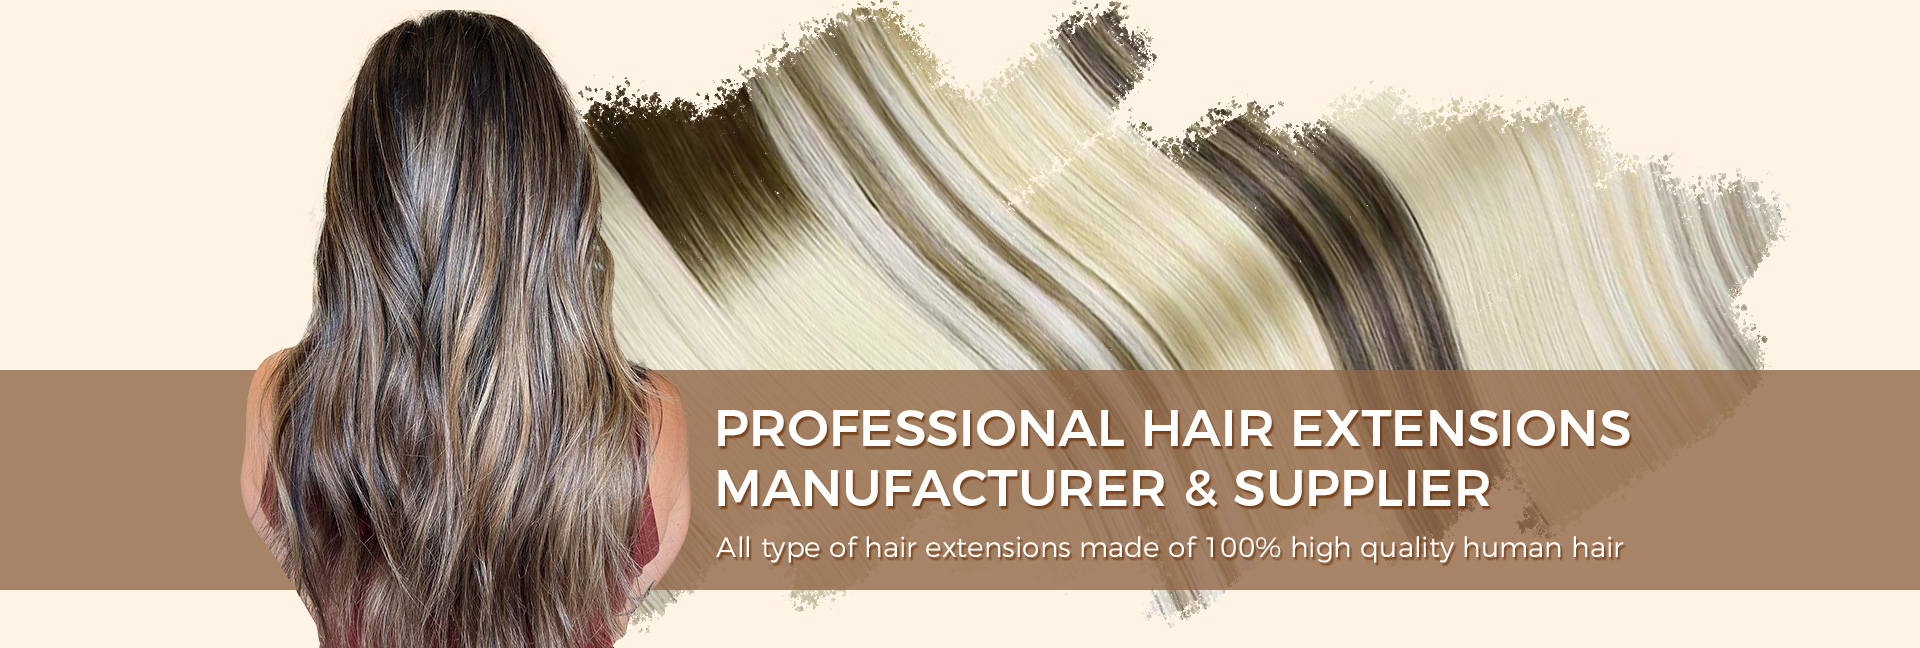 PROFESSIONAL HAIR EXTENSIONS MANUFACTURER & SUPPLIER
All type of hair extensions made of 100% high quality human hair